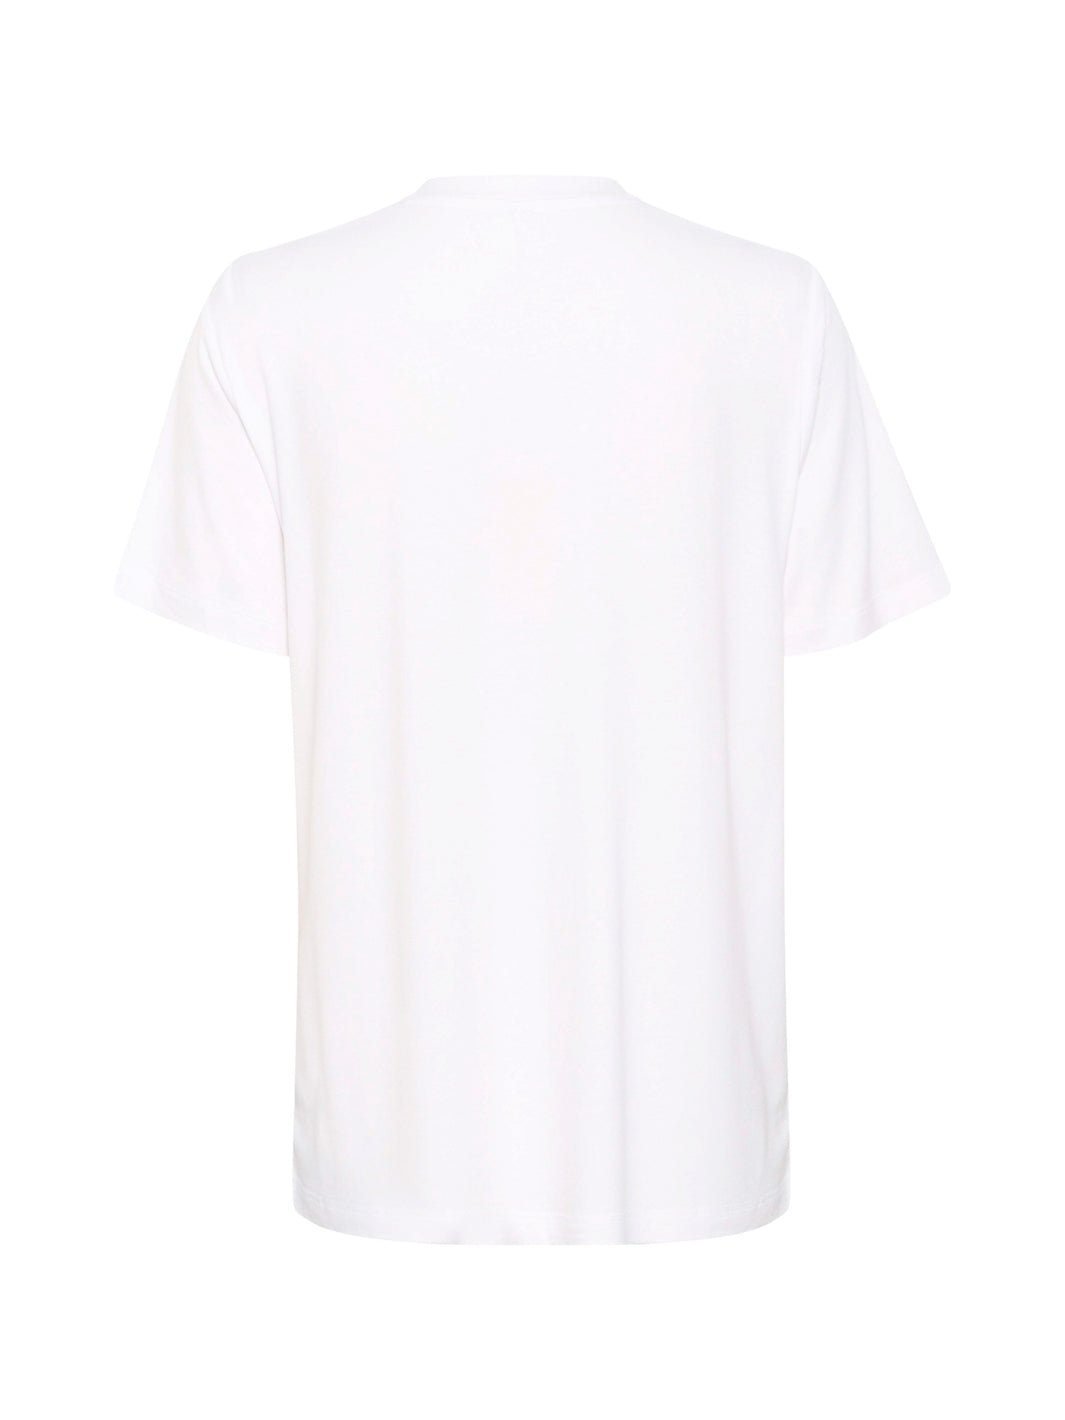 Kaffe KAelin t-shirt white/pink flower print - Online-Mode